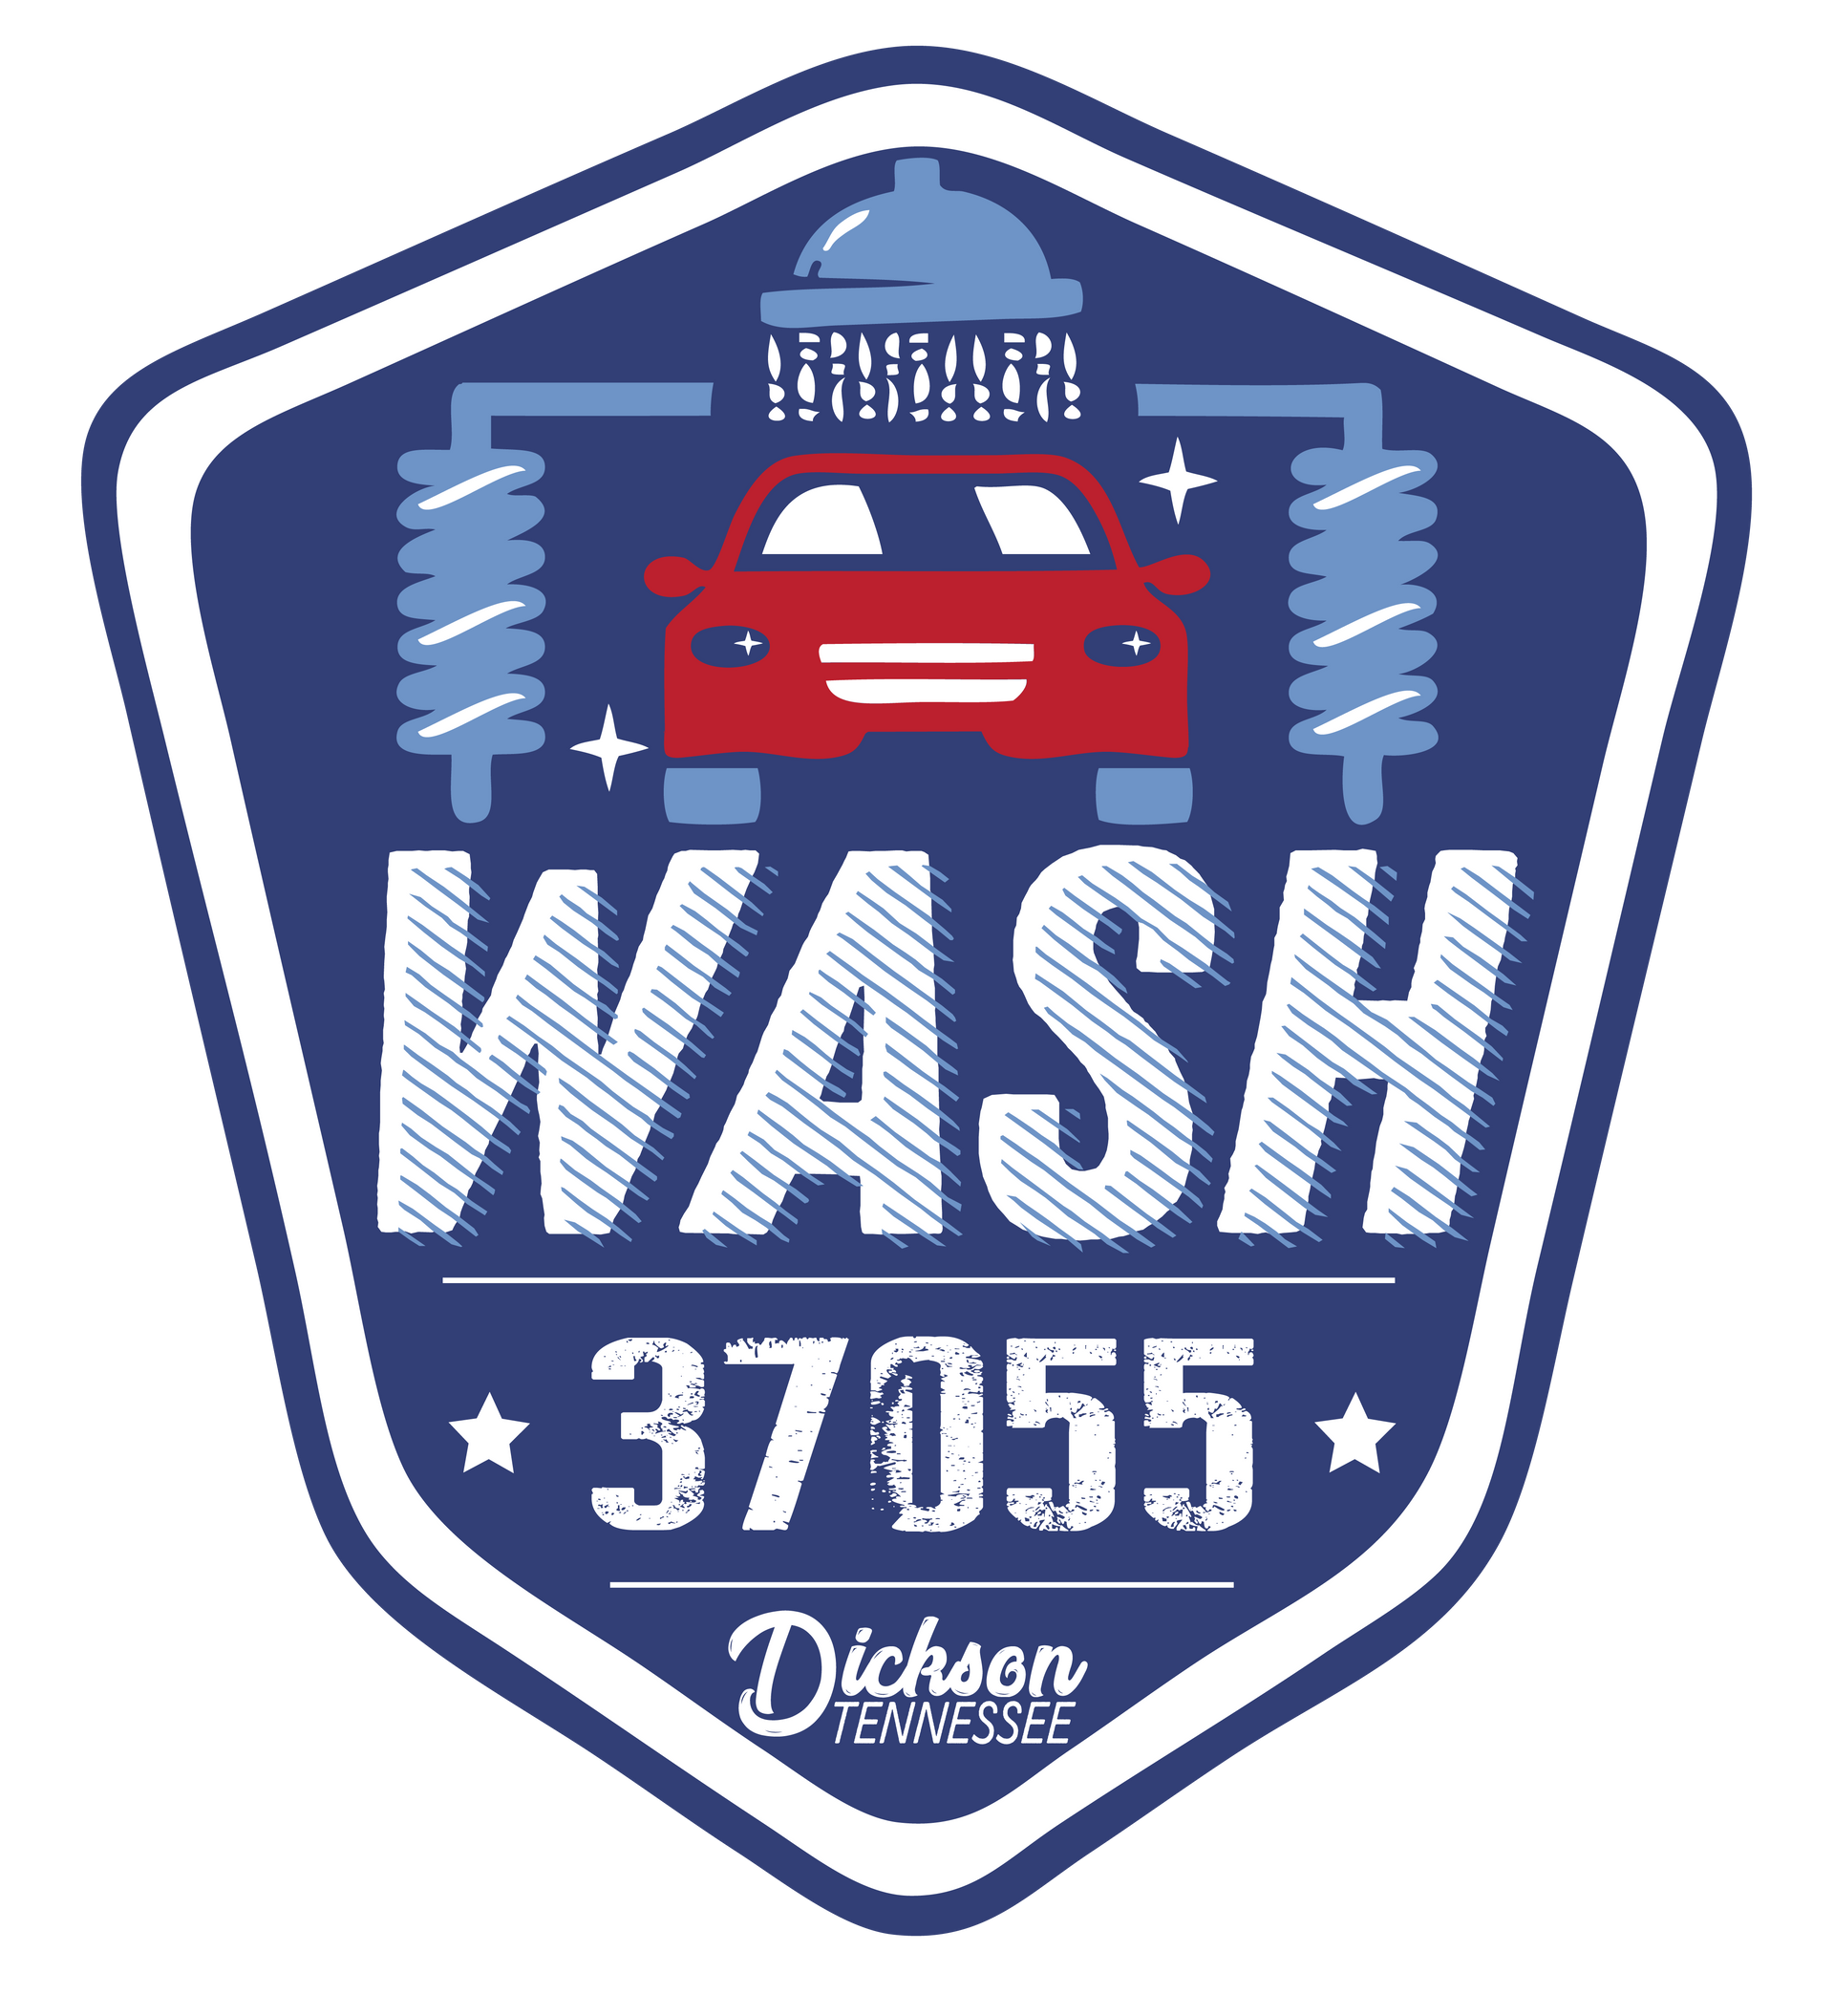 wash 37055 dickson carwash Tennessee